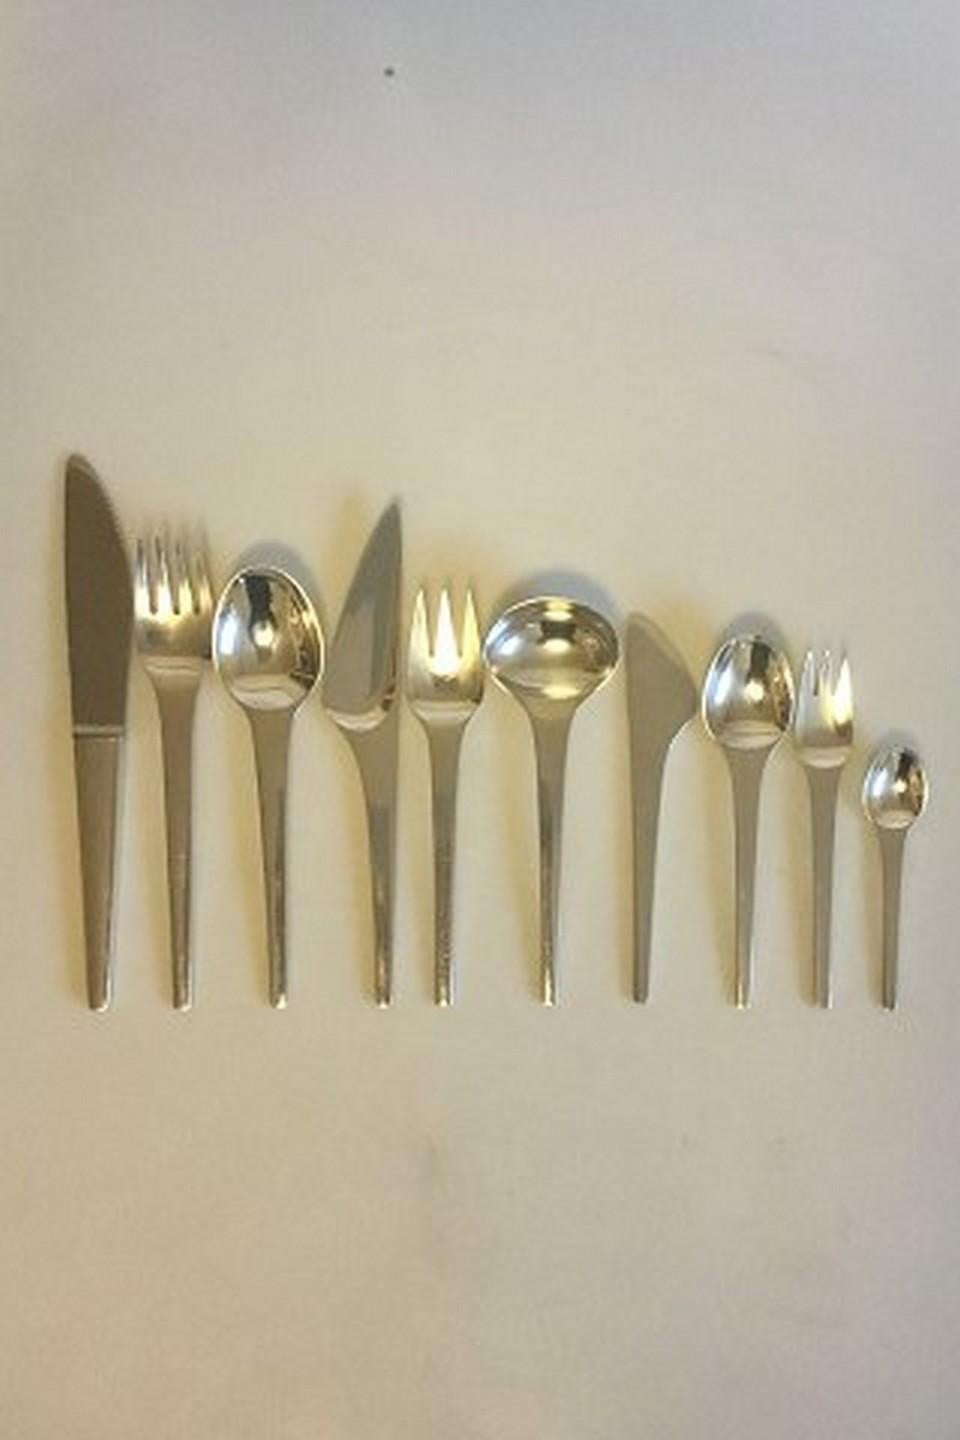 Georg Jensen caravel sterling silver vintage 120 piece set for 12 persons

The set consist of:


12 serrated dinner knifes 22cm / 8 2/3